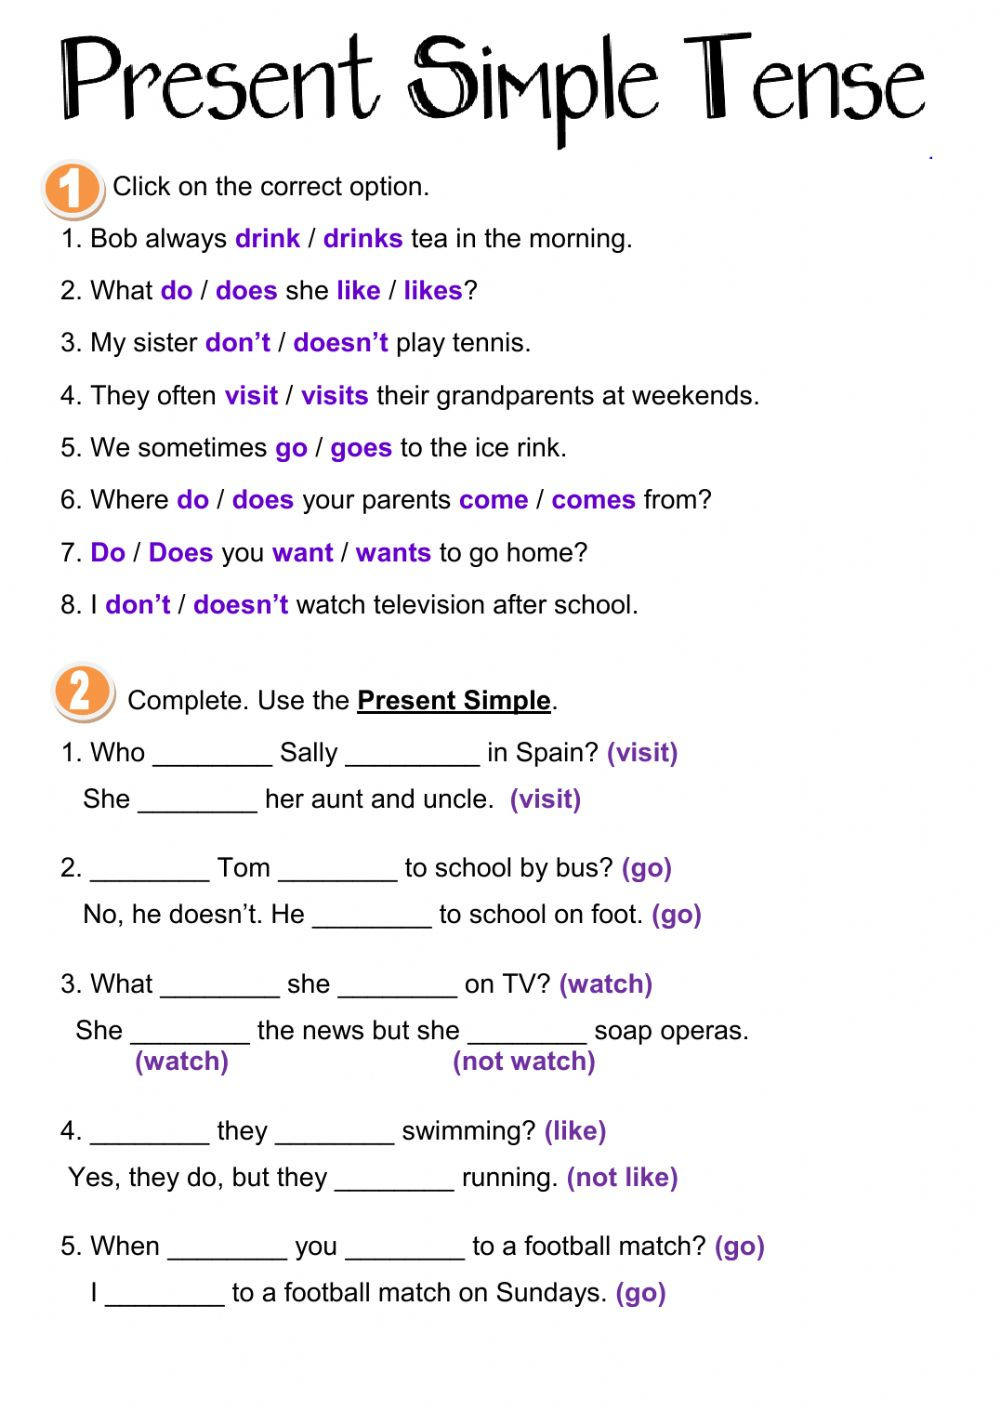 Present Simple Tense Interactive Worksheet — db-excel.com